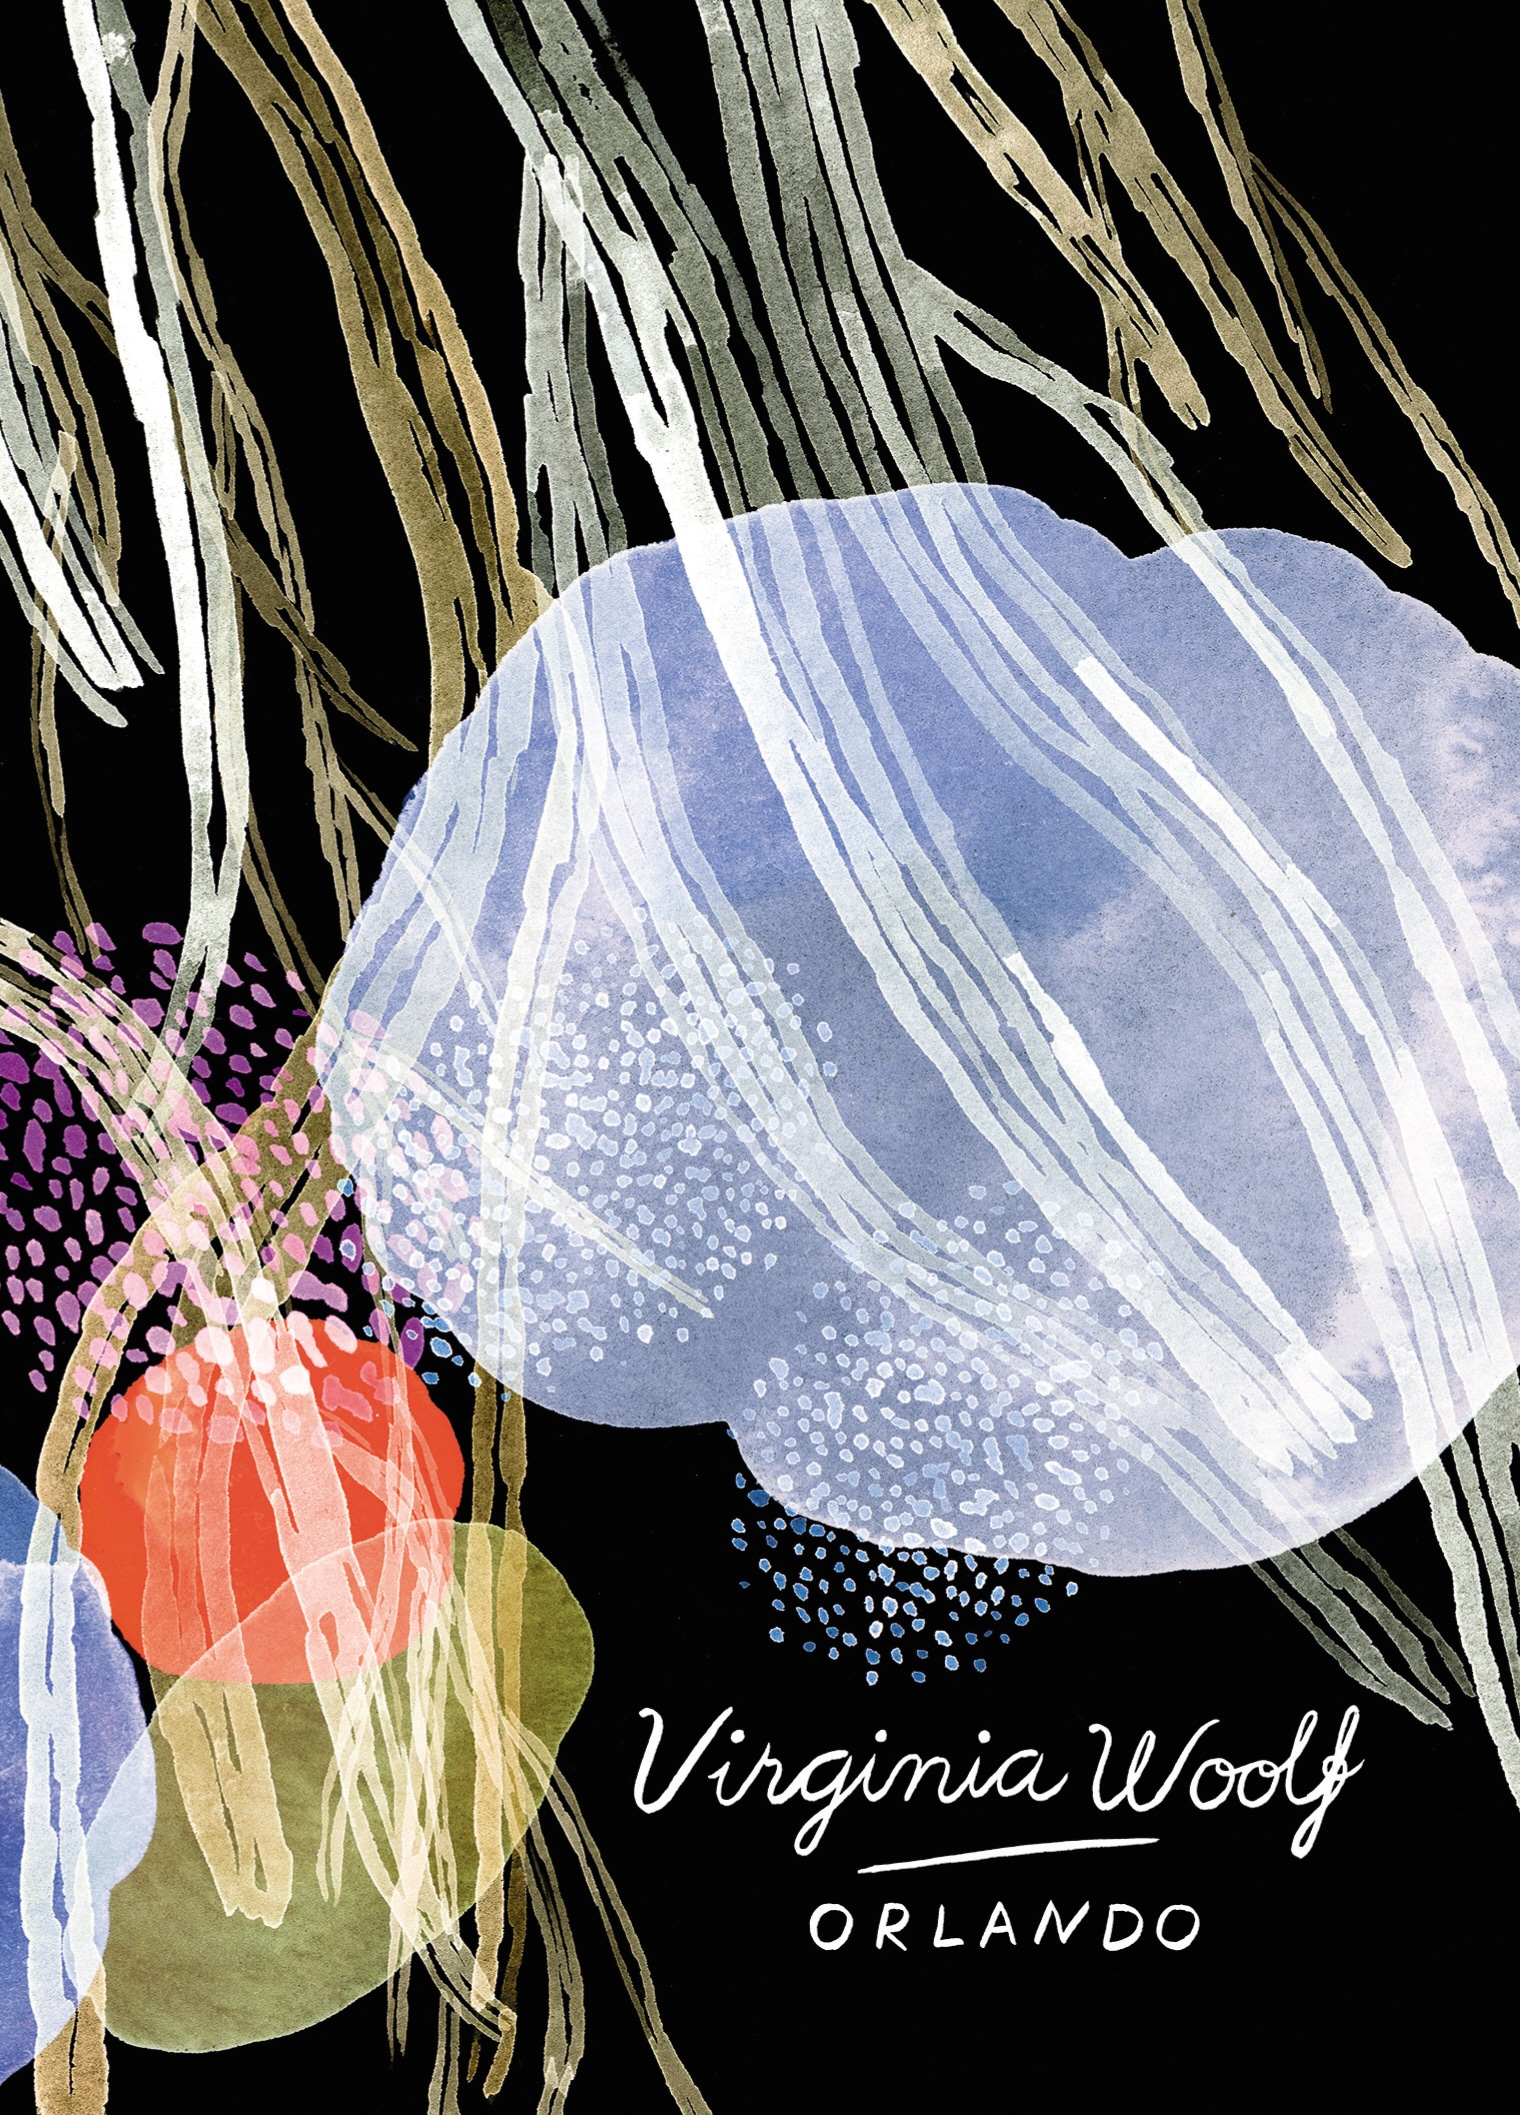 Book “Orlando (Vintage Classics Woolf Series)” by Virginia Woolf — October 6, 2016